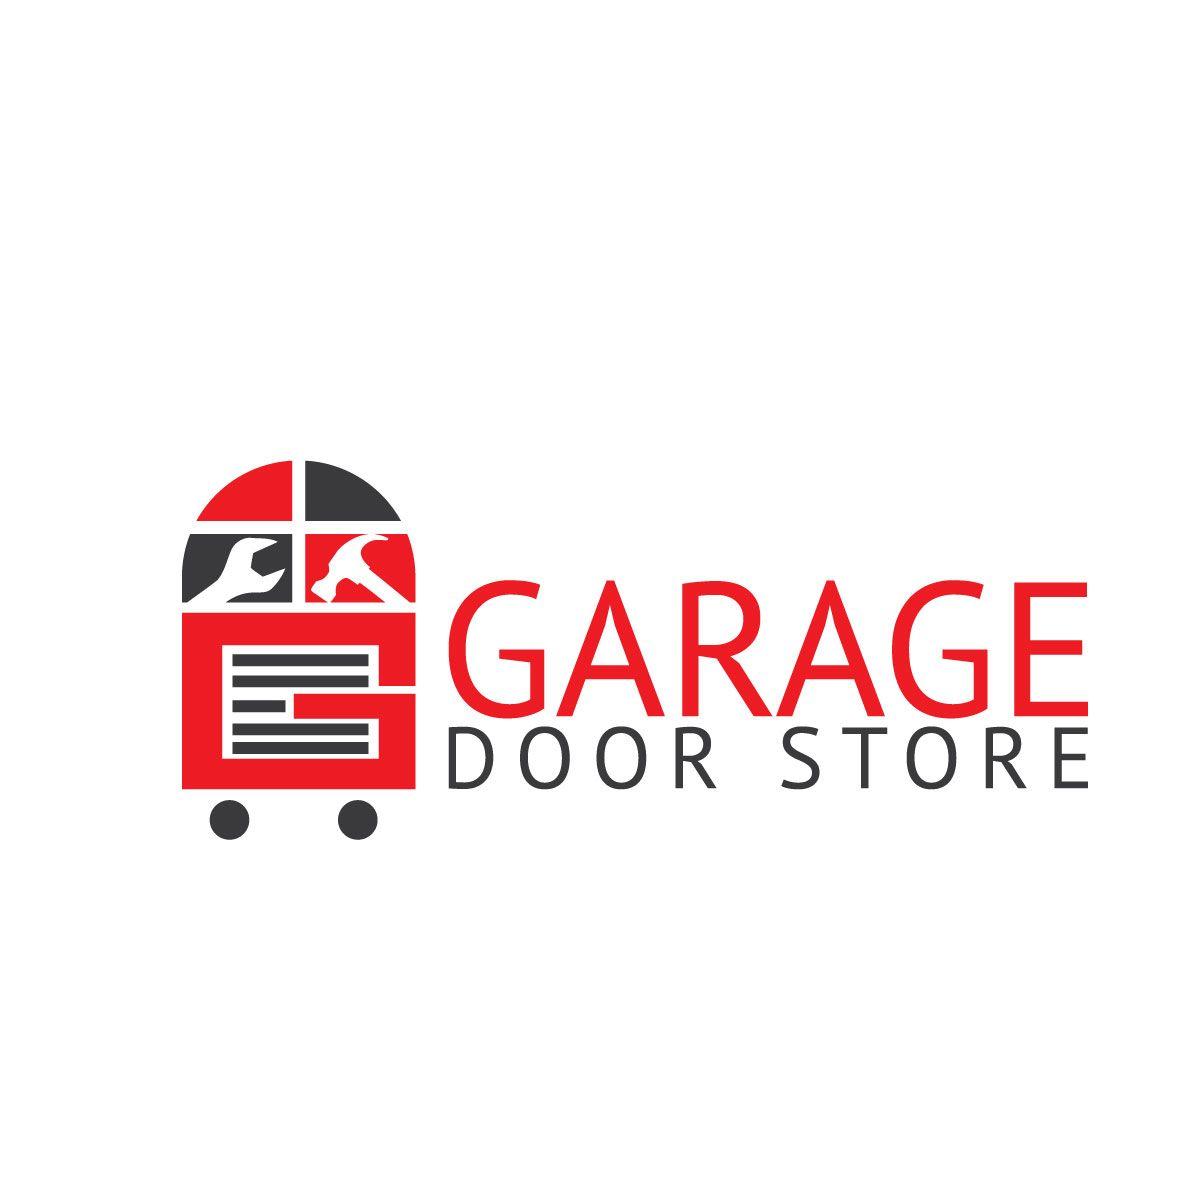 Garage Store Logo - Logo Design for Garage Door Store by Art Fingers | Design #18743367